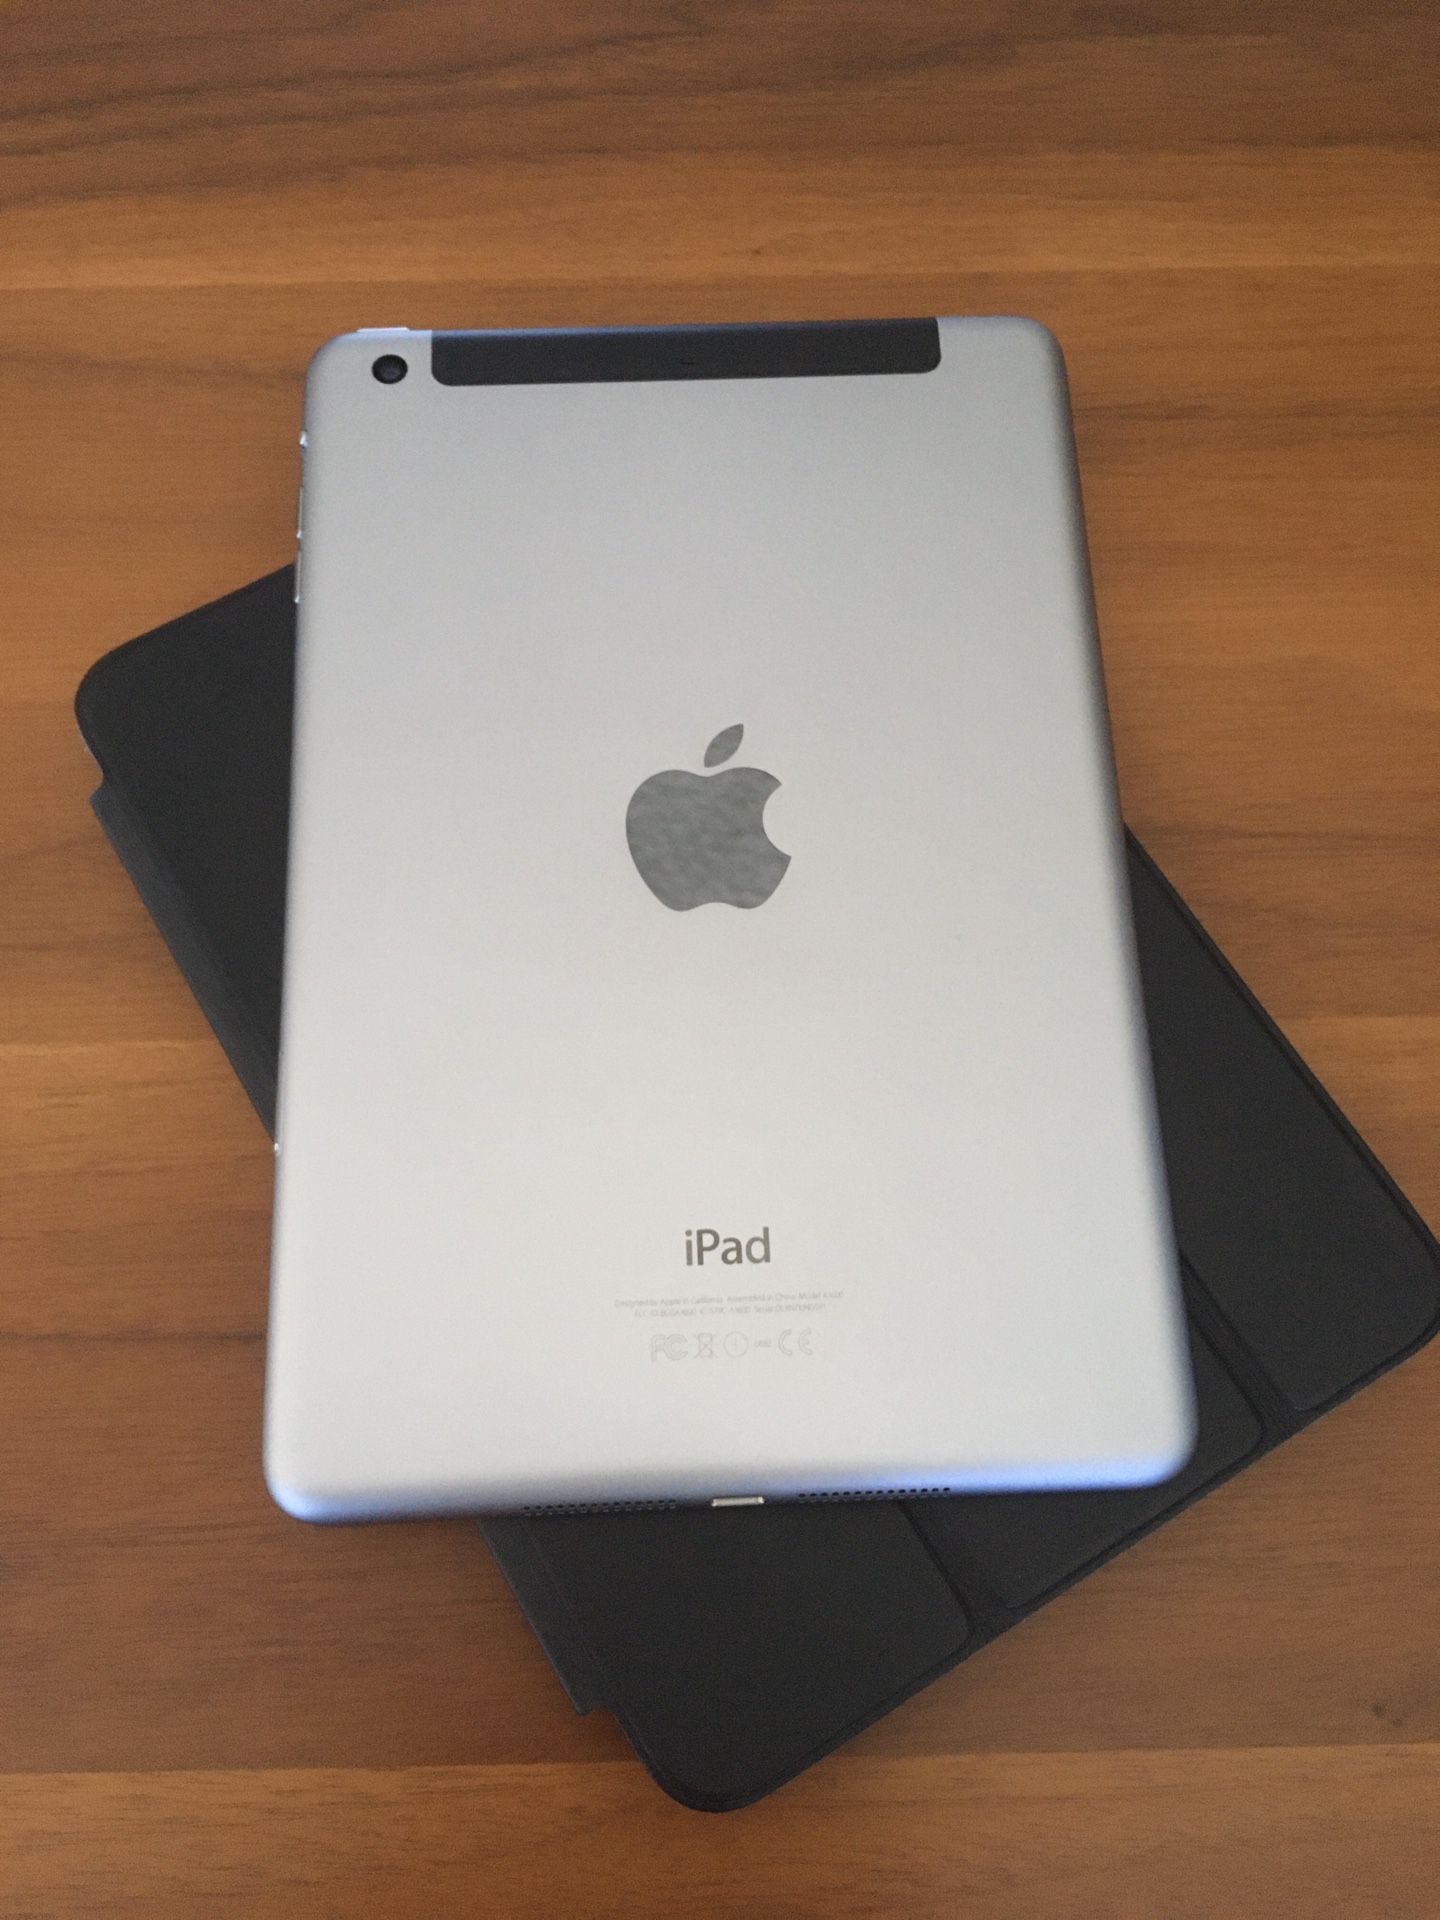 Apple iPad Mini 3 Space Gray - Like New!